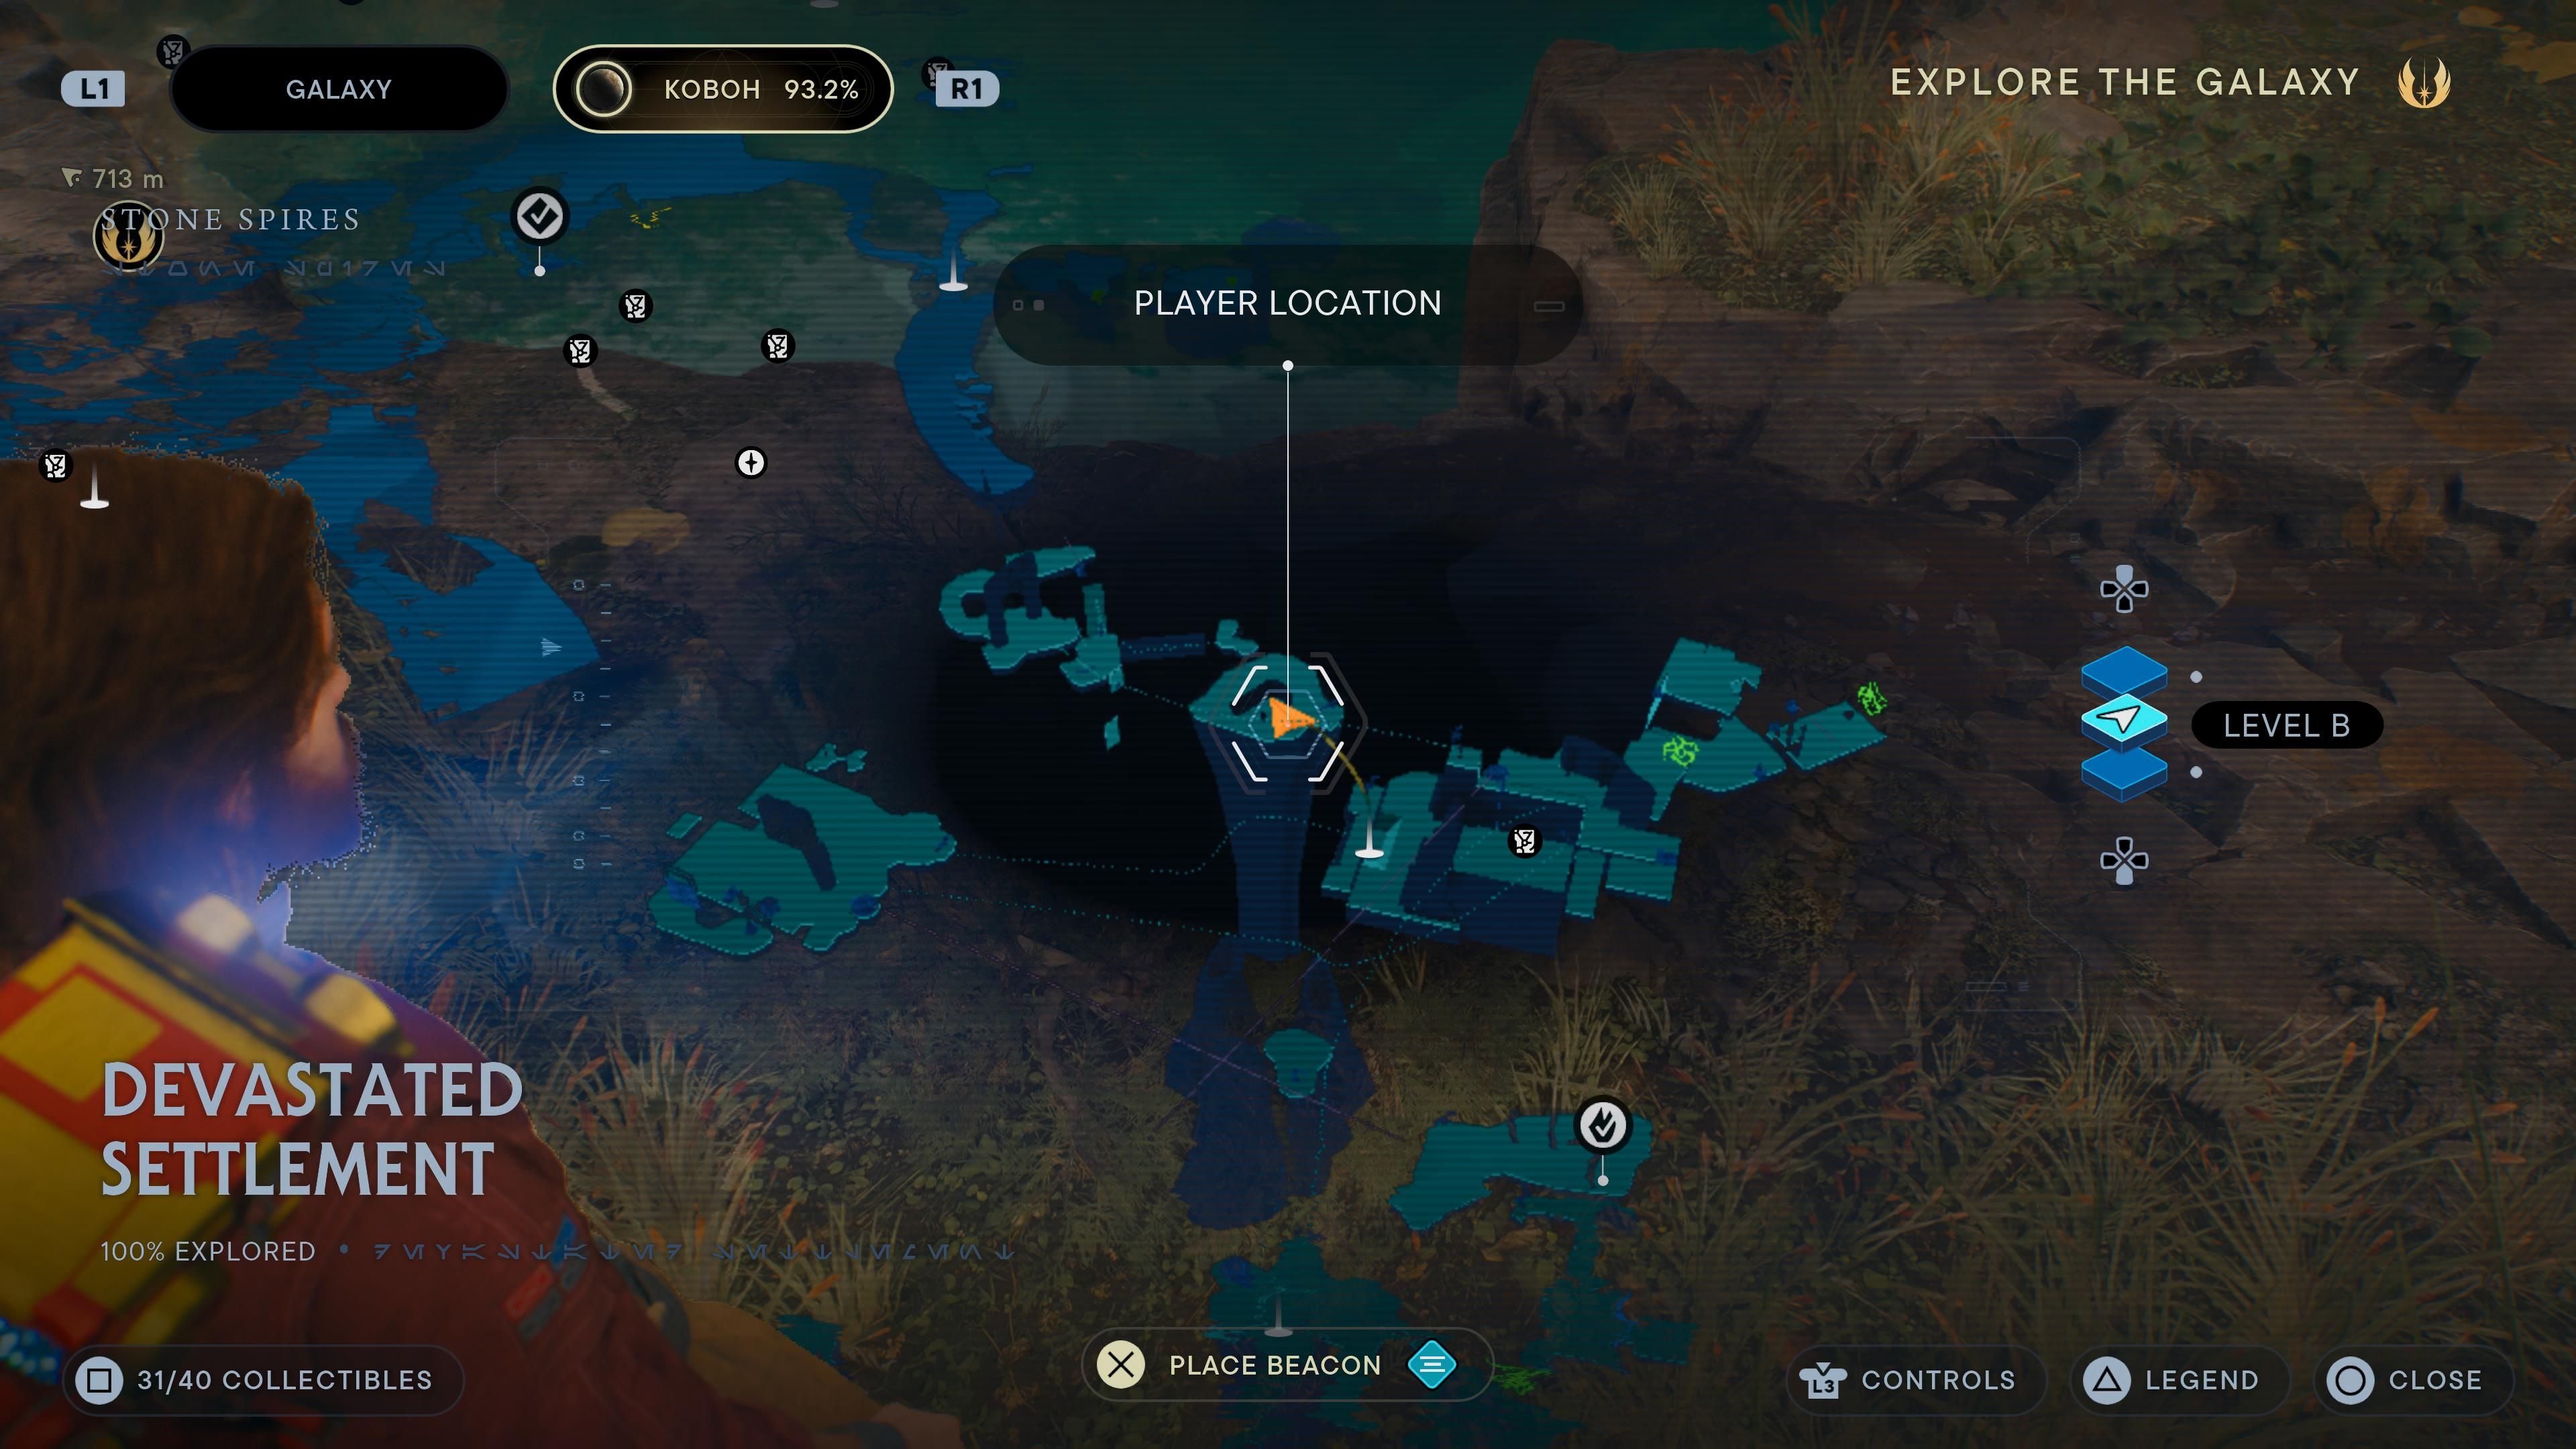 Star Wars: Jedi Survivor's ruined settlement map